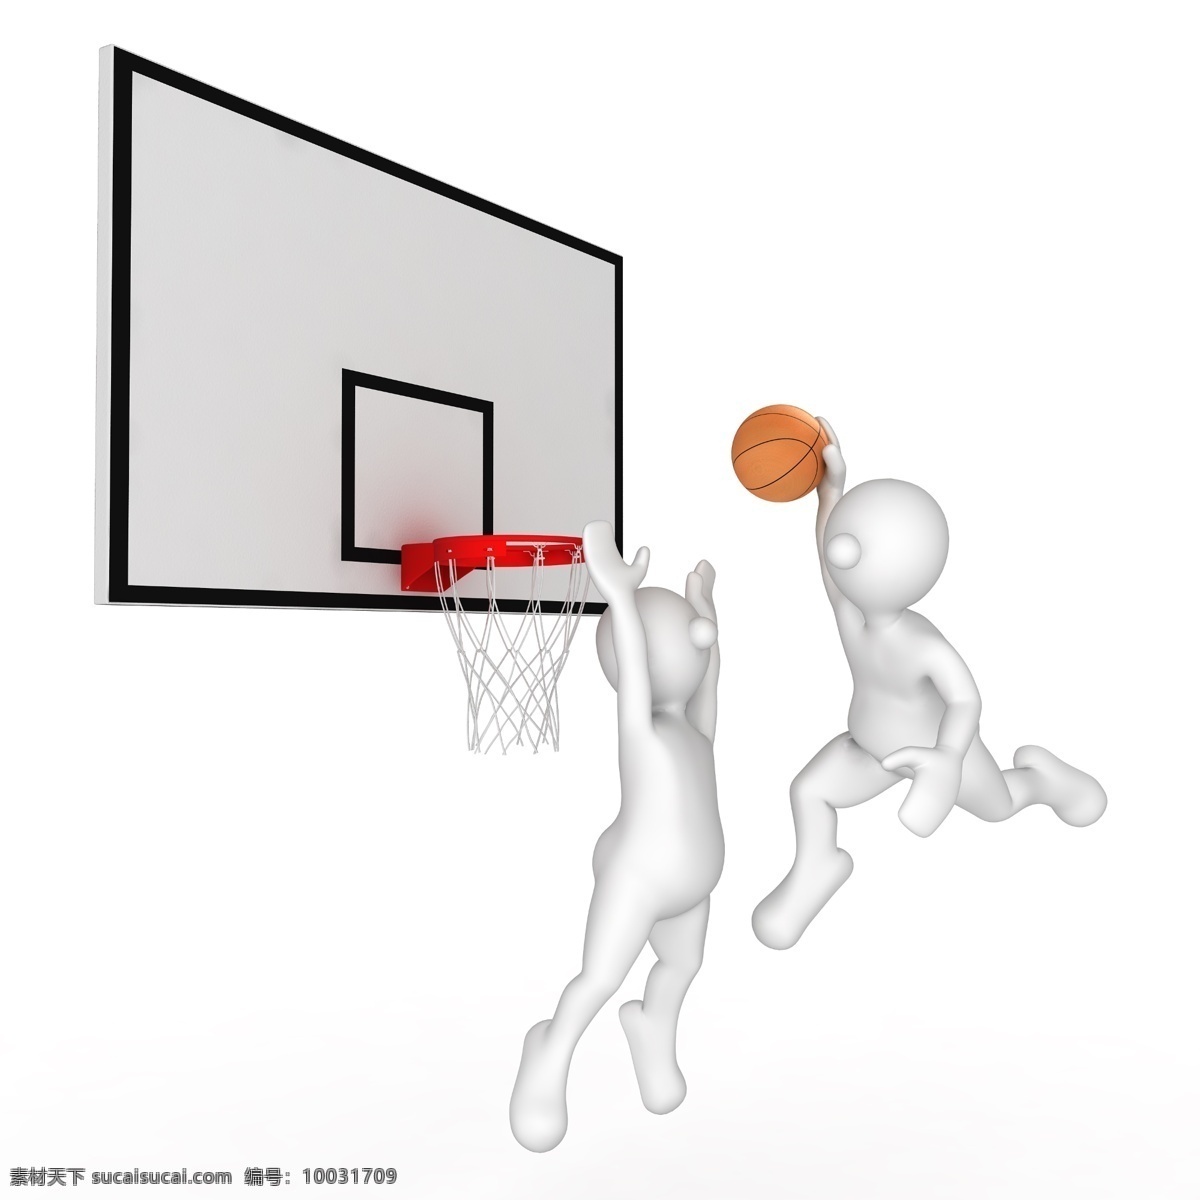 3d人物 3d设计 3d小人 打篮球 扣篮 篮球 篮球运动 设计素材 模板下载 投篮 篮框 篮板 攻防 白色小人 psd源文件